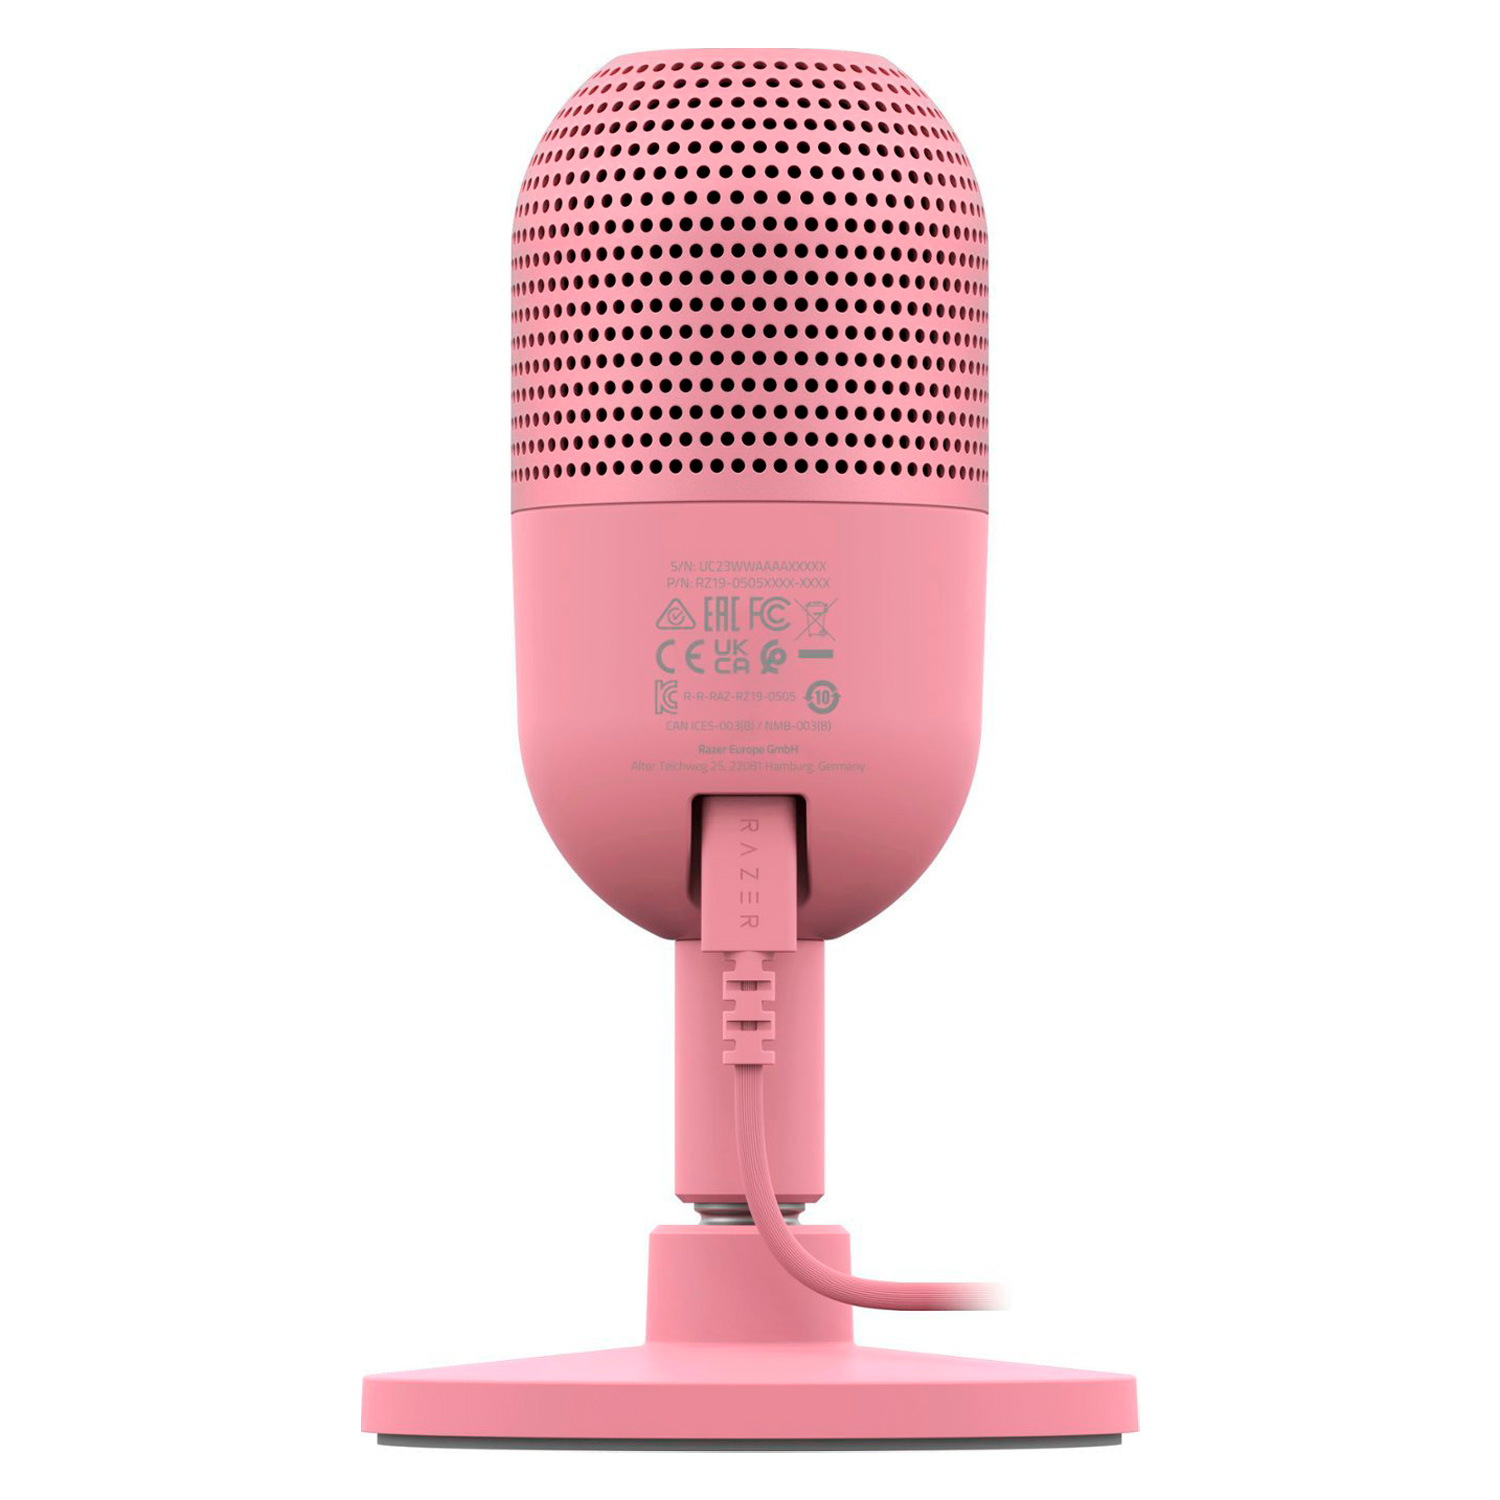 Microfone Condensador Razer Seiren V3 Mini USB-C - Rosa